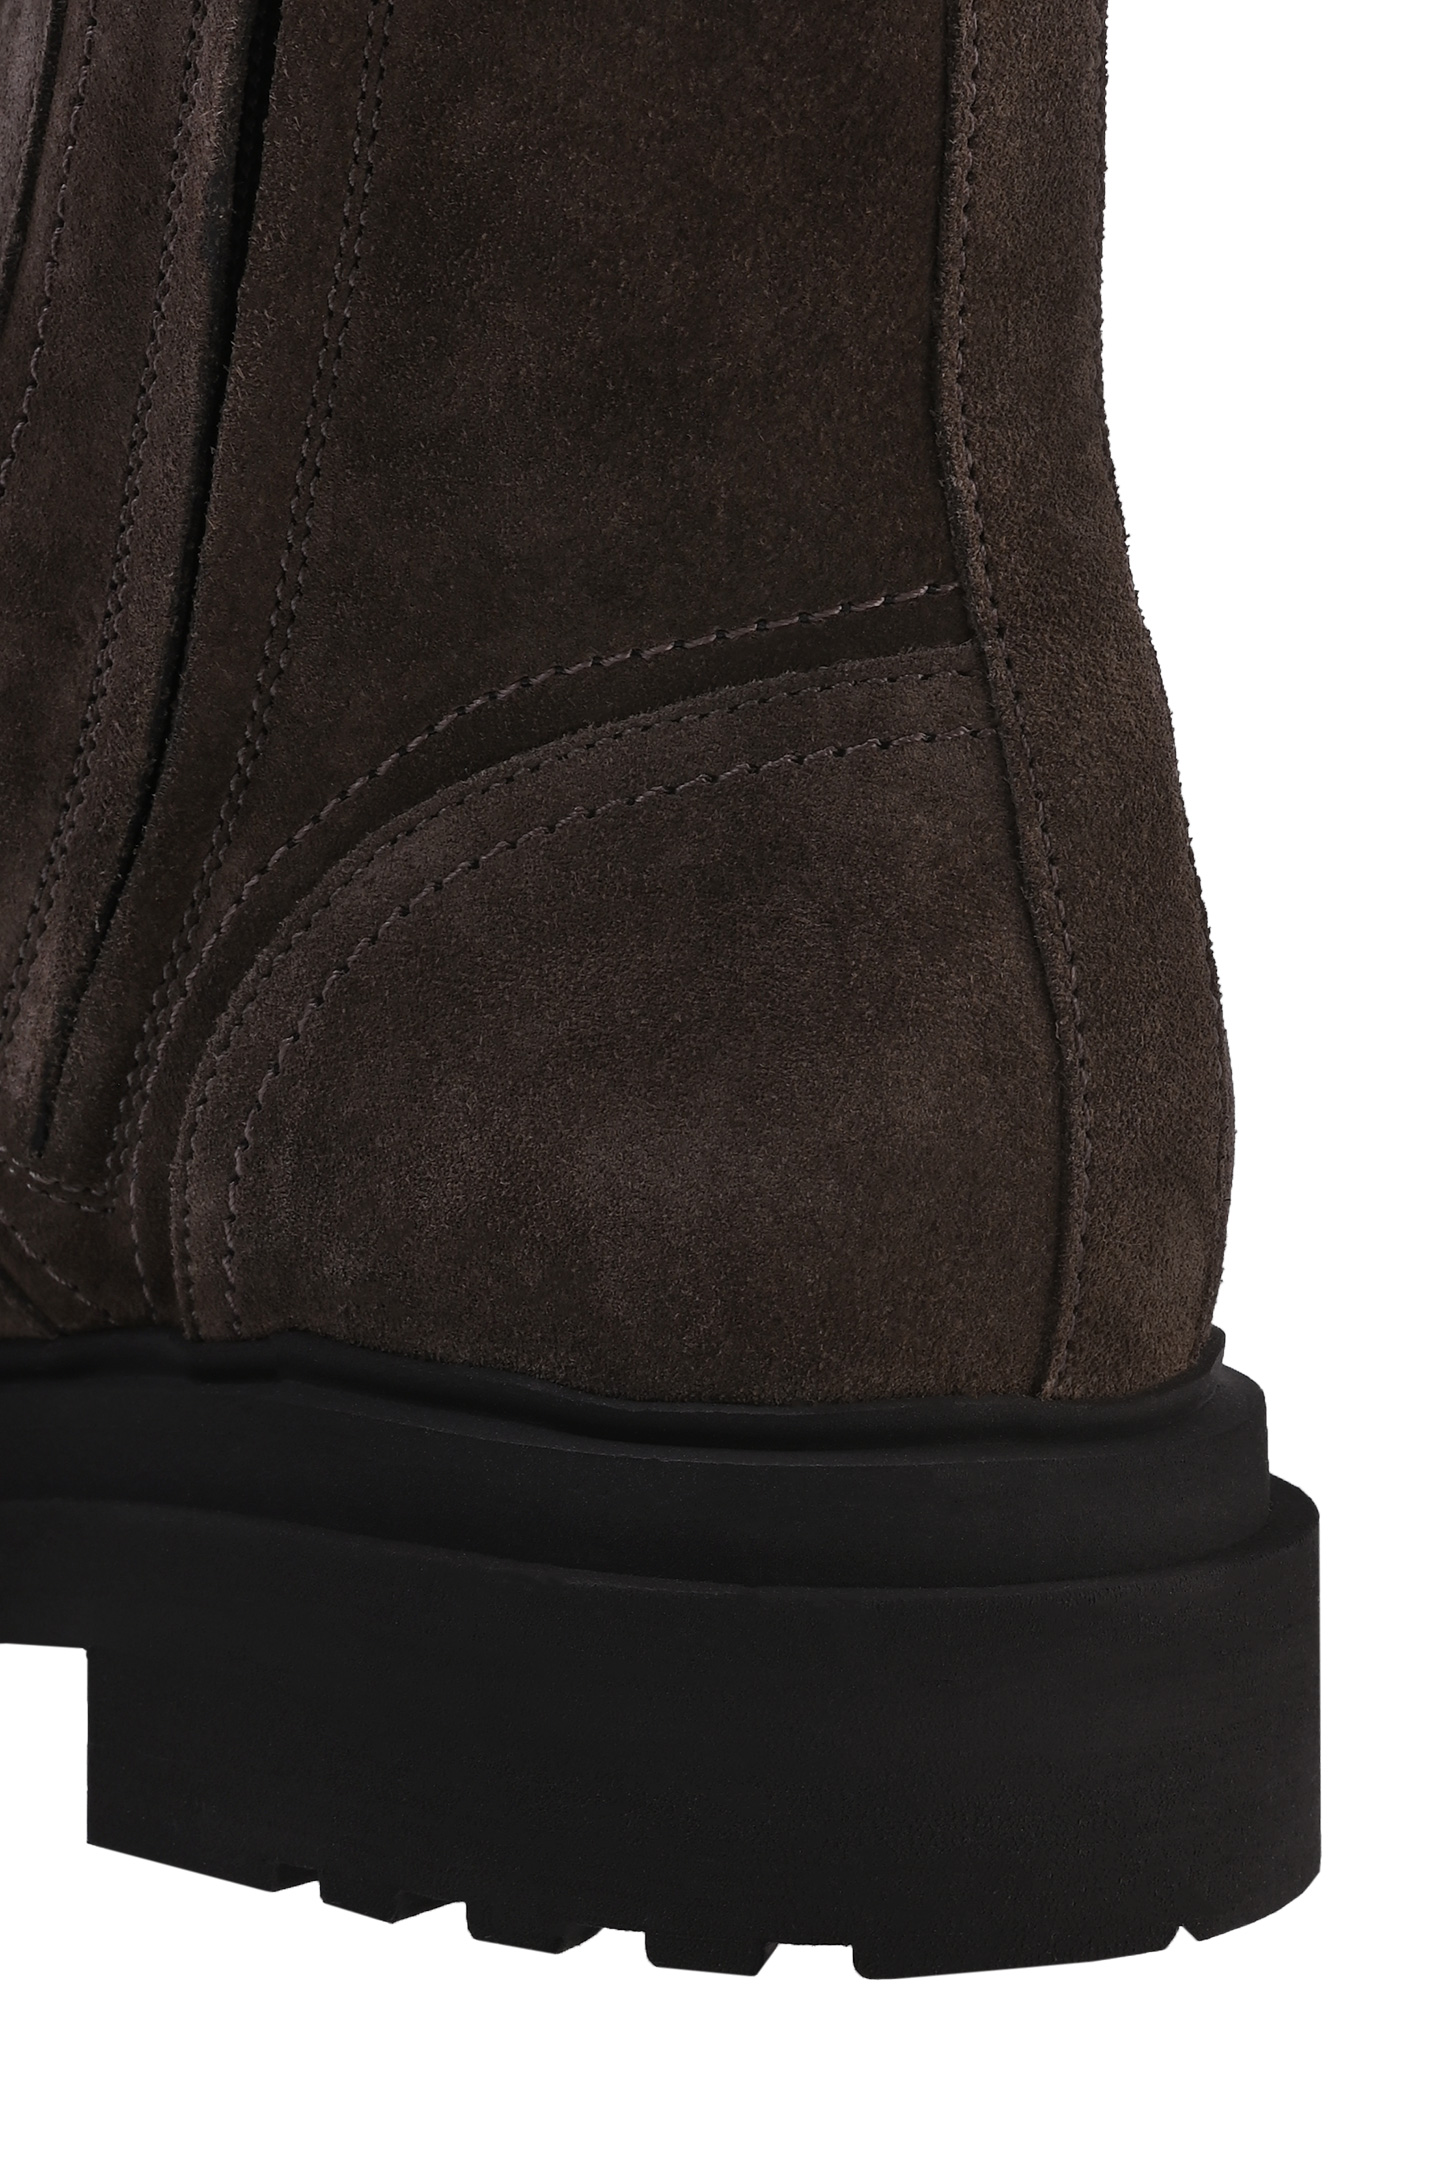 Ботинки BRUNELLO  CUCINELLI MZSFGBP175, цвет: Темно-коричневый, Женский